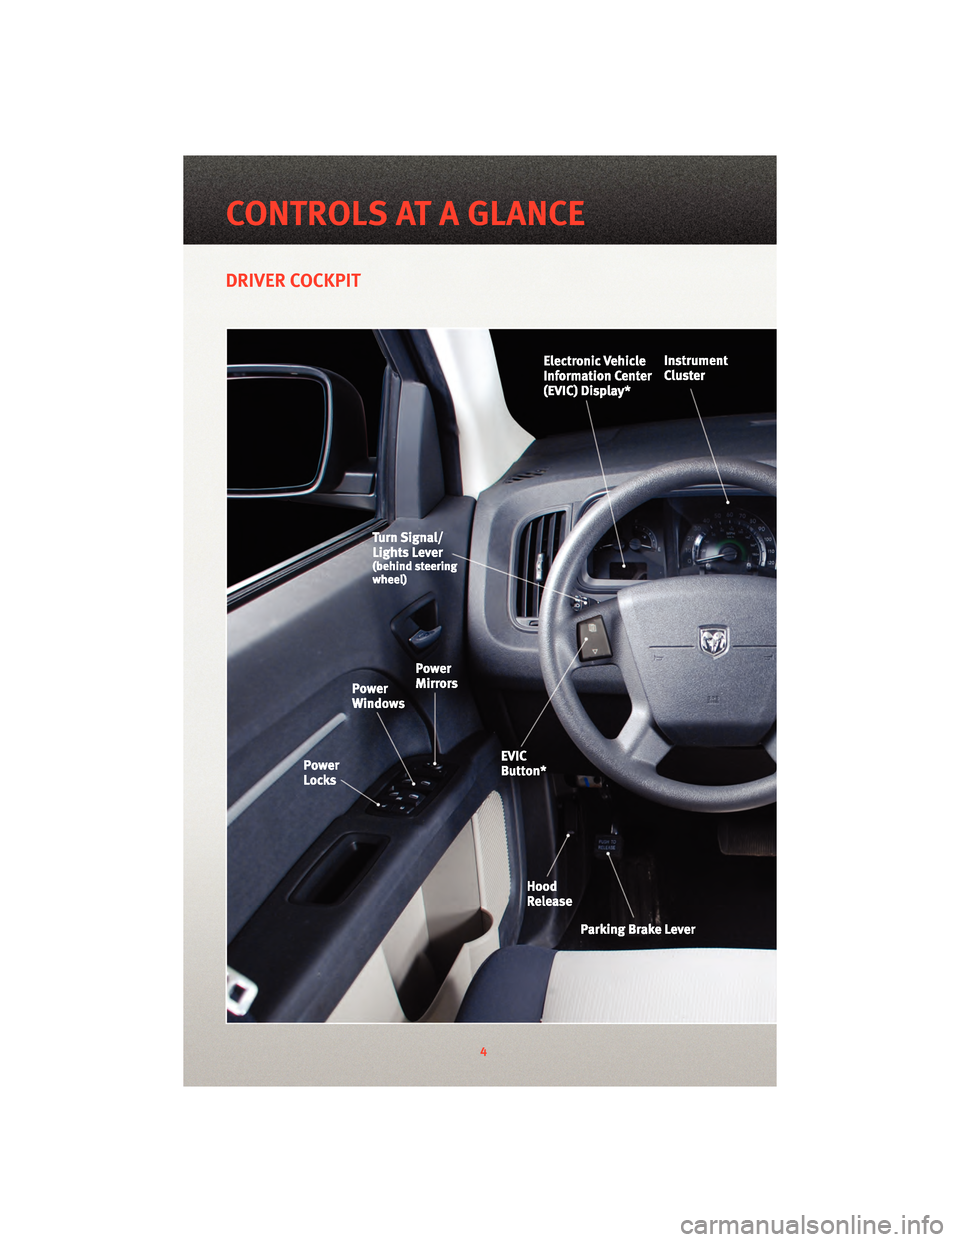 DODGE JOURNEY 2010 1.G User Guide DRIVER COCKPIT
4
CONTROLS AT A GLANCE 